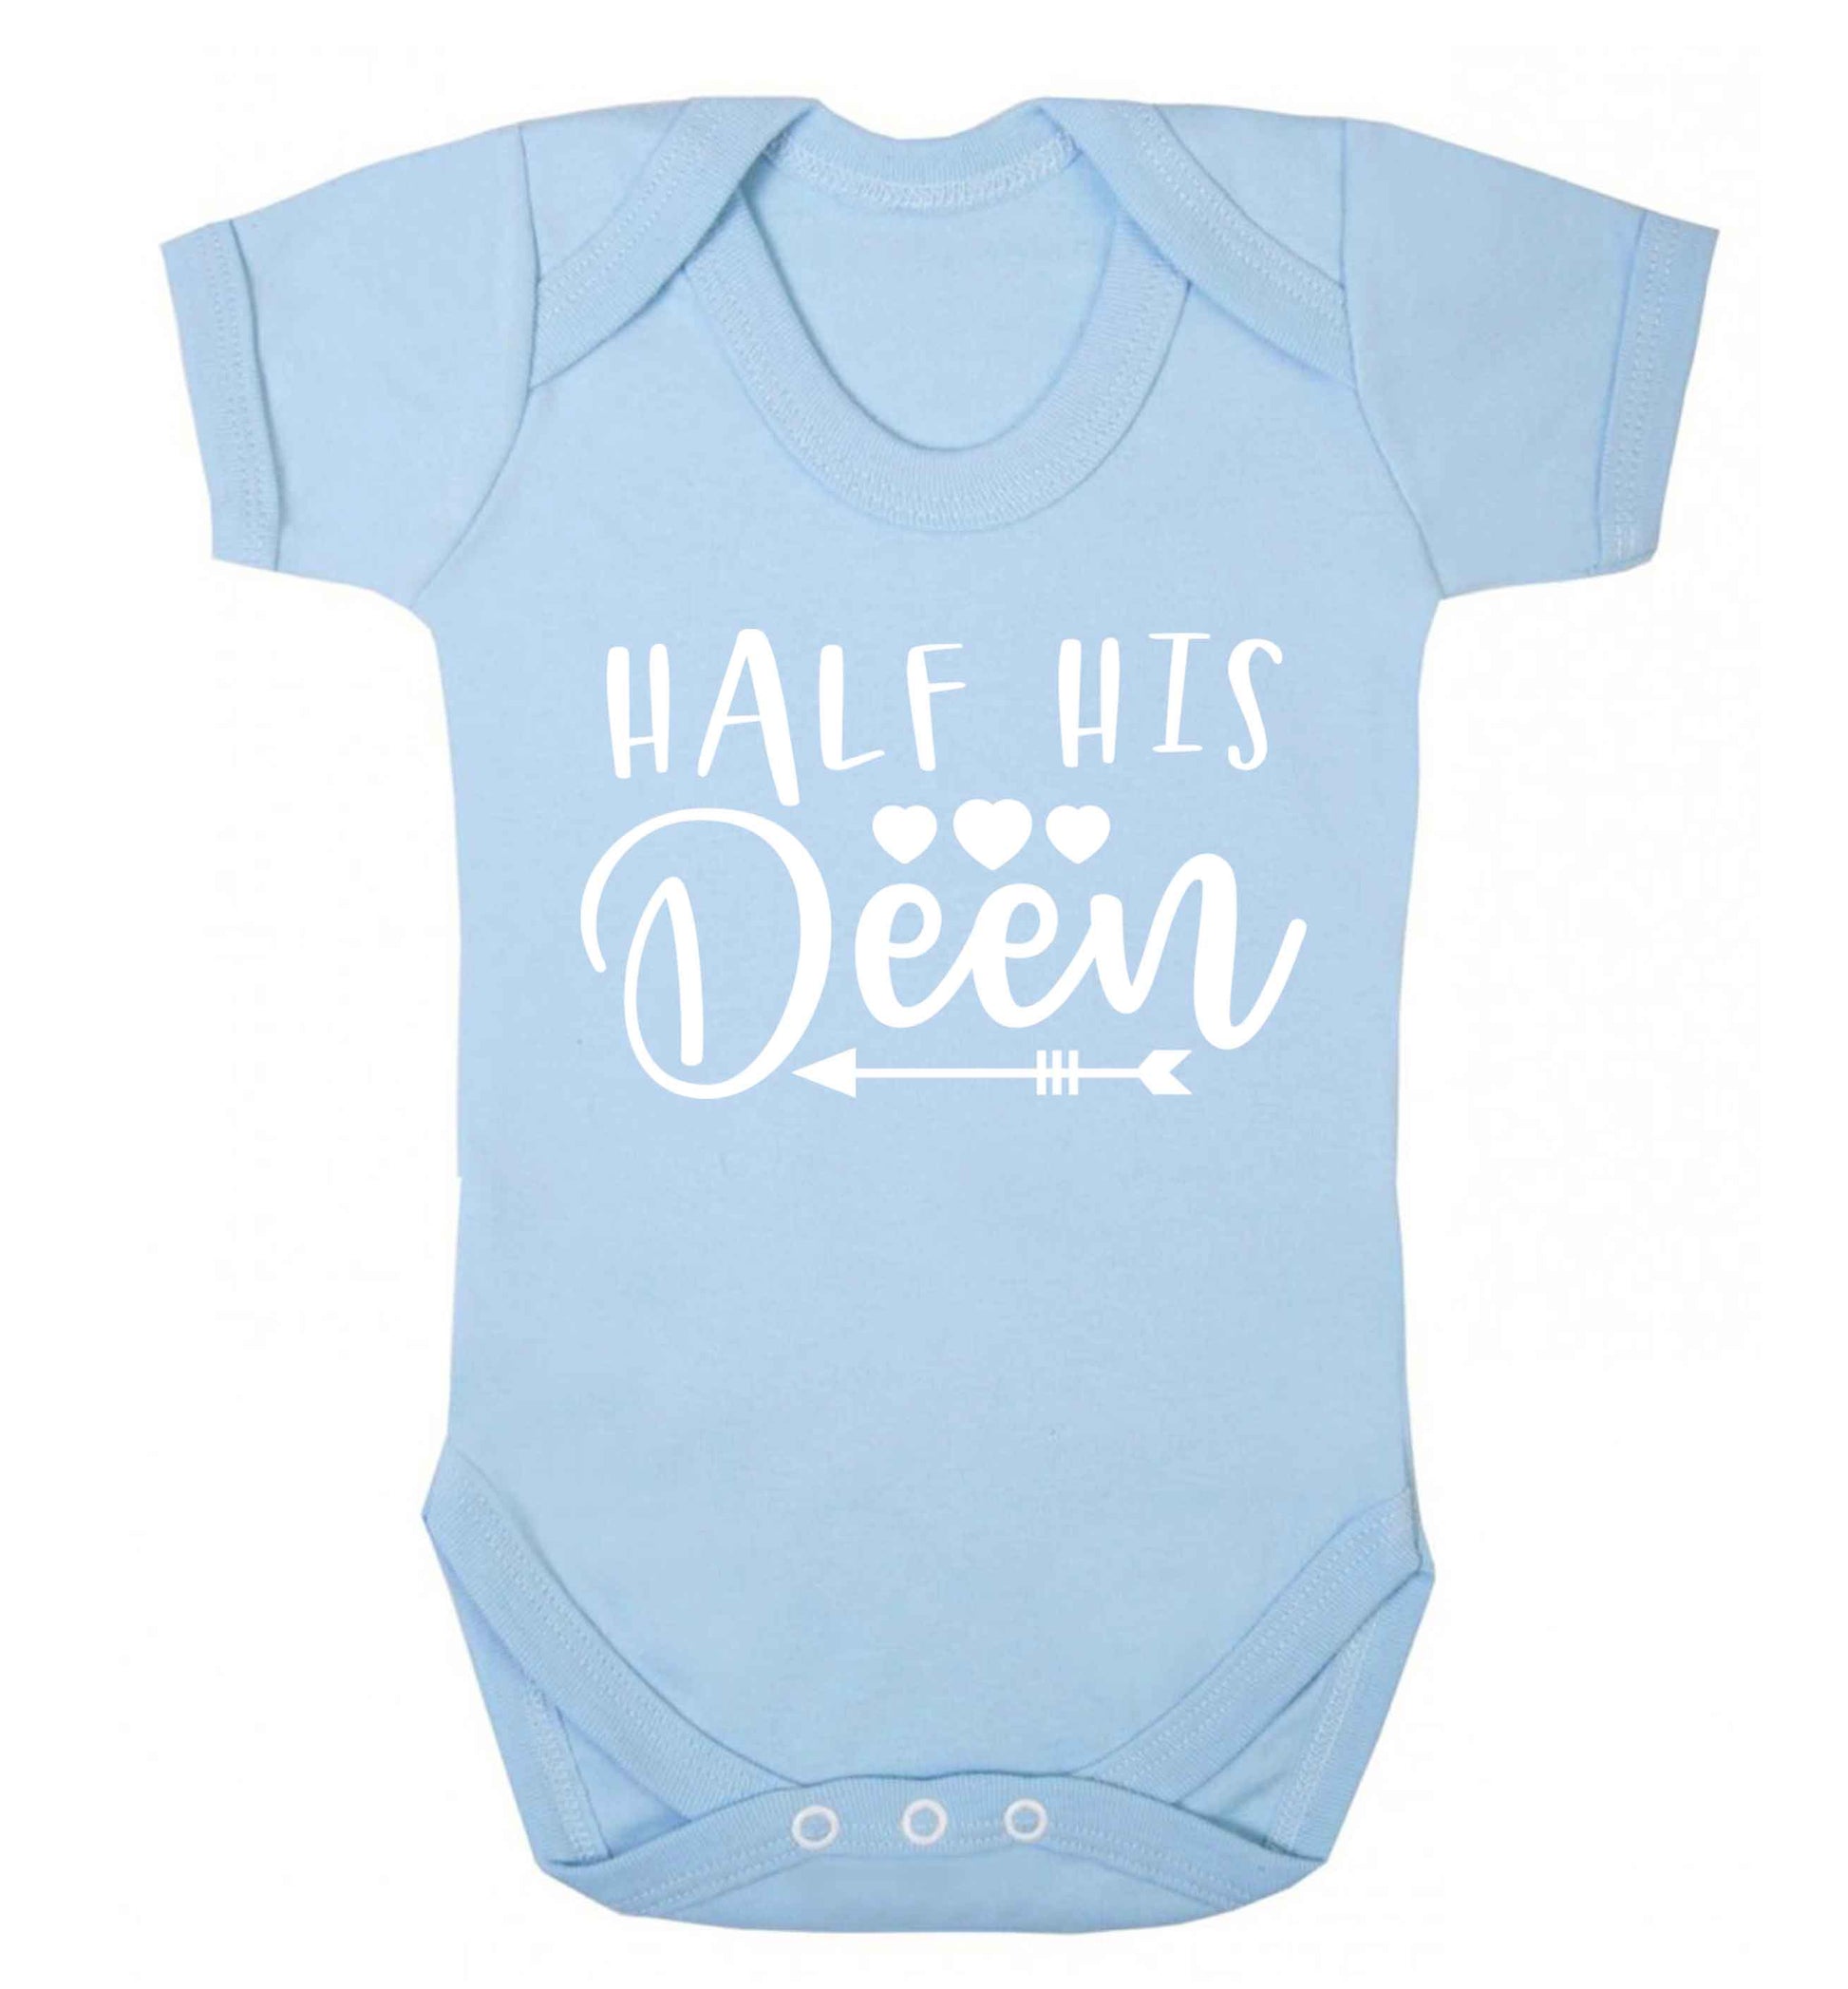 Half his deen Baby Vest pale blue 18-24 months